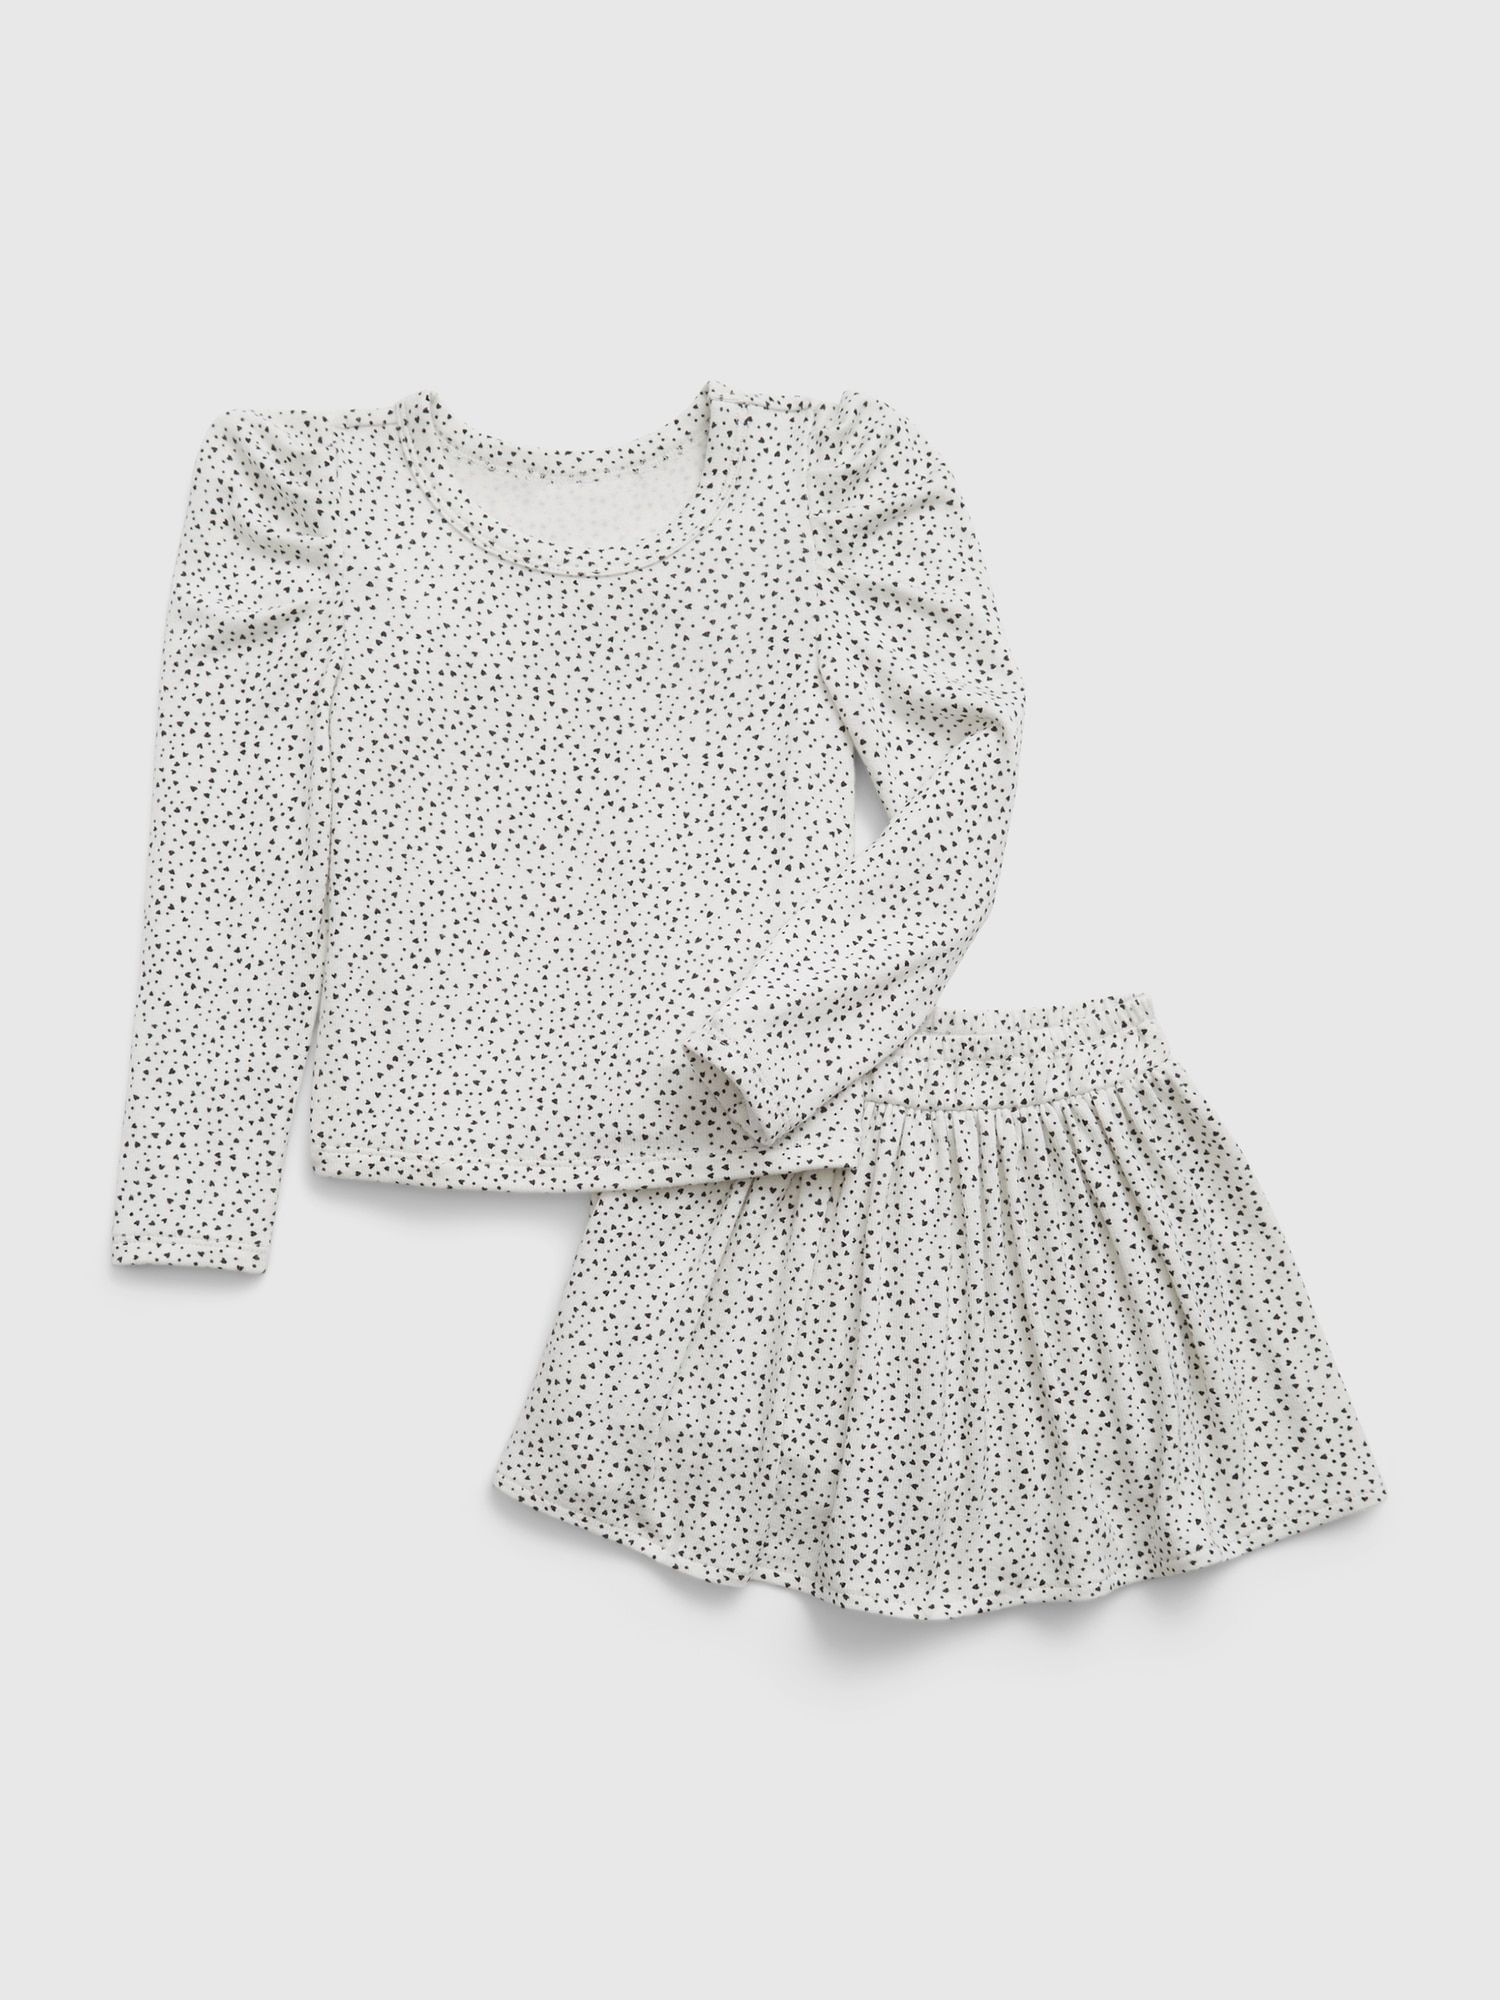 Gap Toddler Softspun Skort Outfit Set